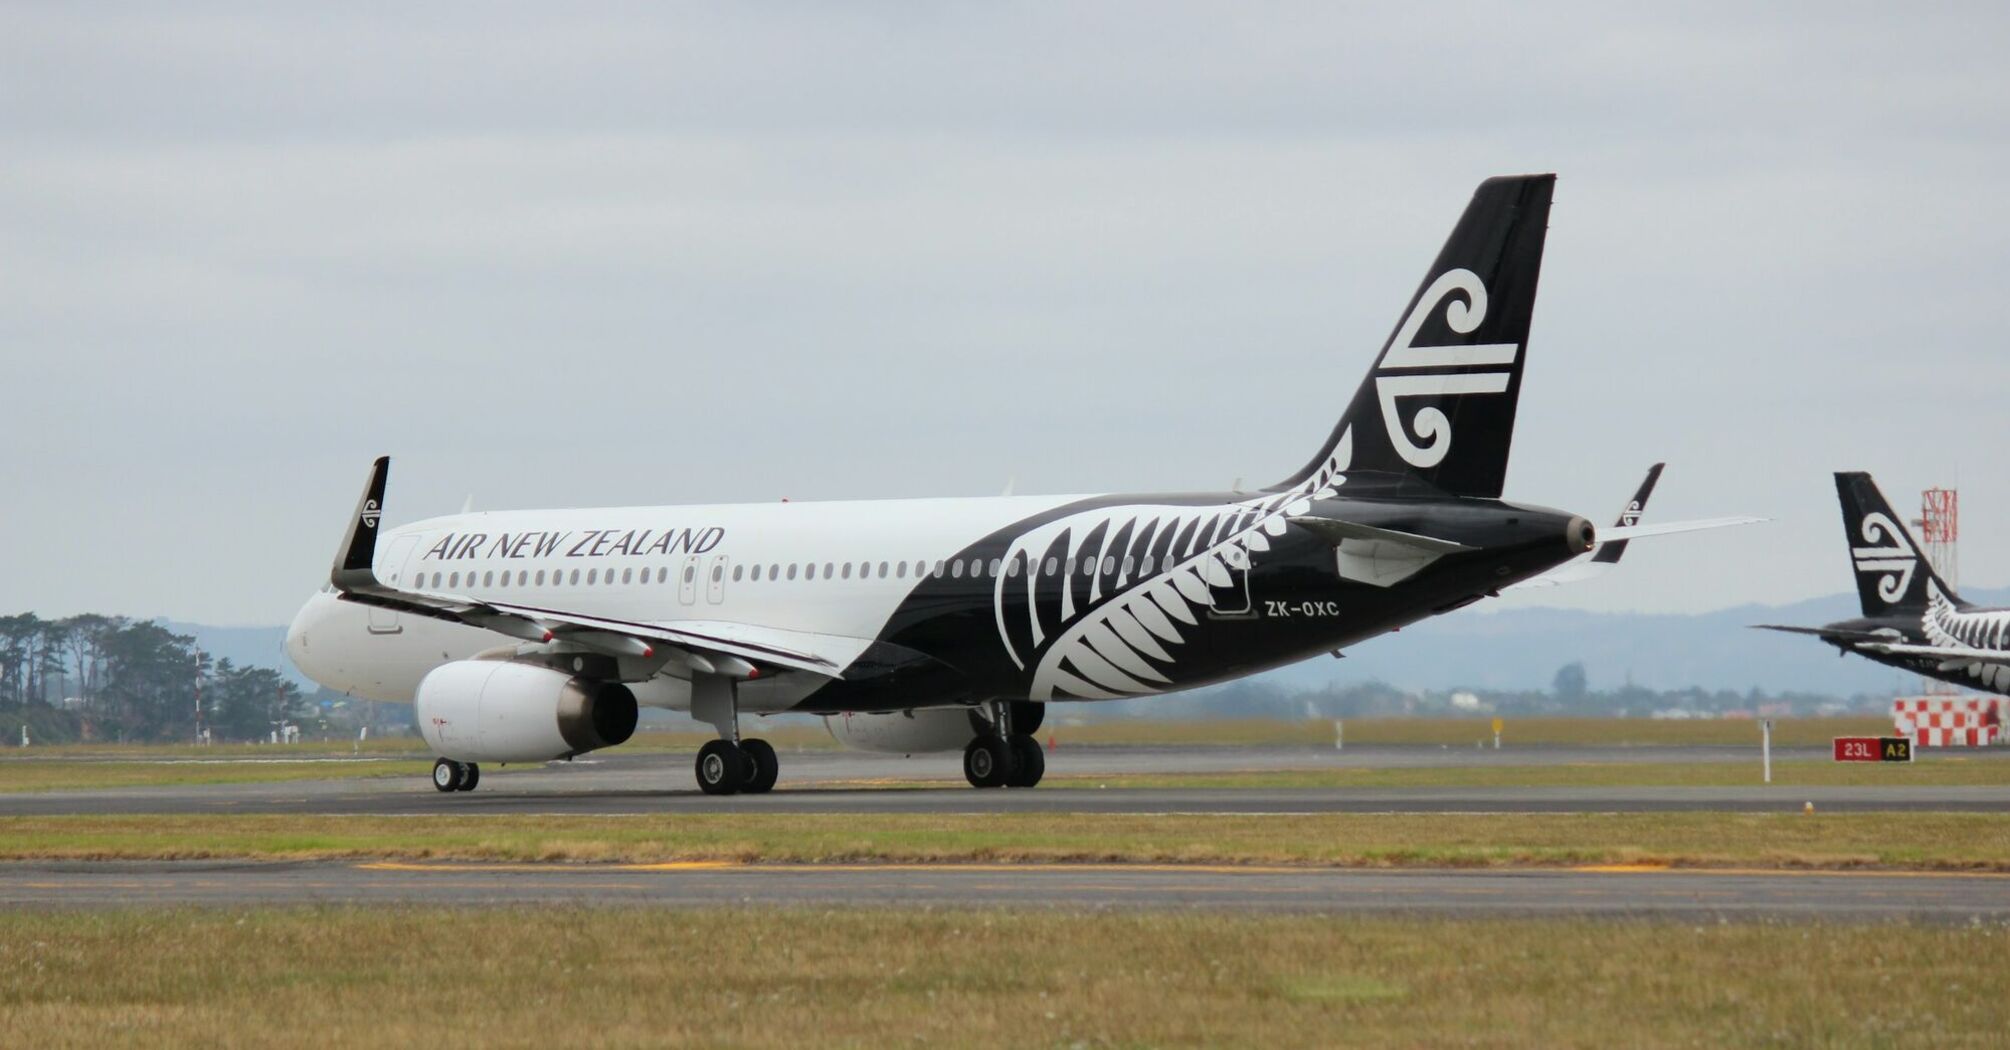 Air New Zealand aircraft on the runway